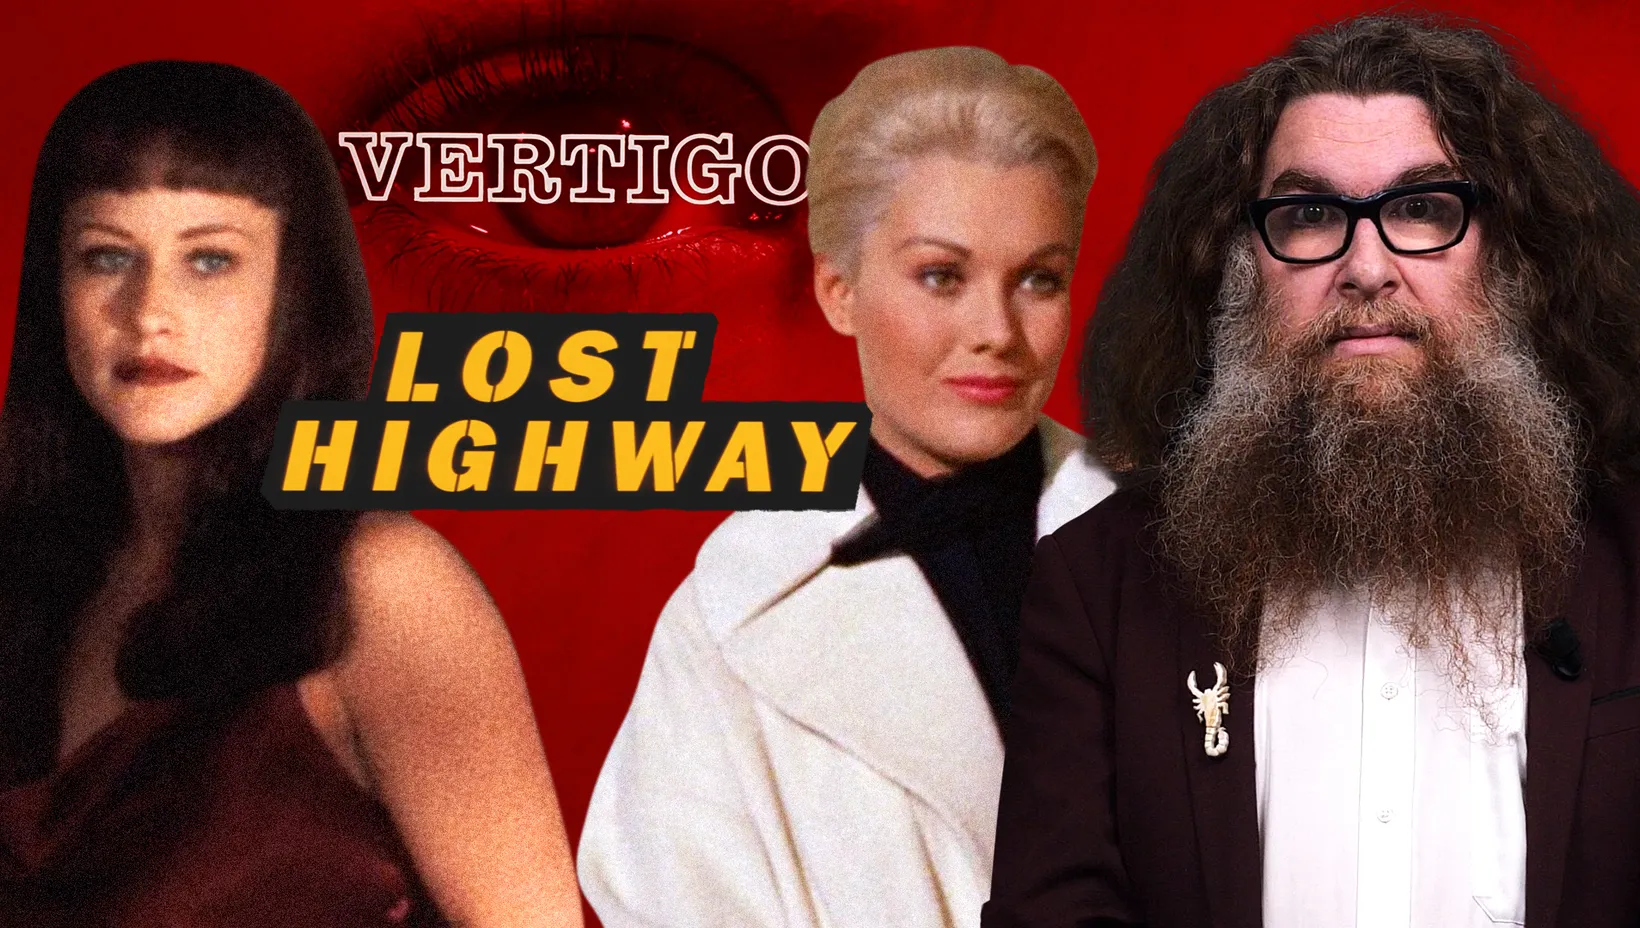 « Vertigo » d'Alfred Hitchcock et « Lost Highway » de David Lynch : les stars ont meilleur goût mortes que vivantes